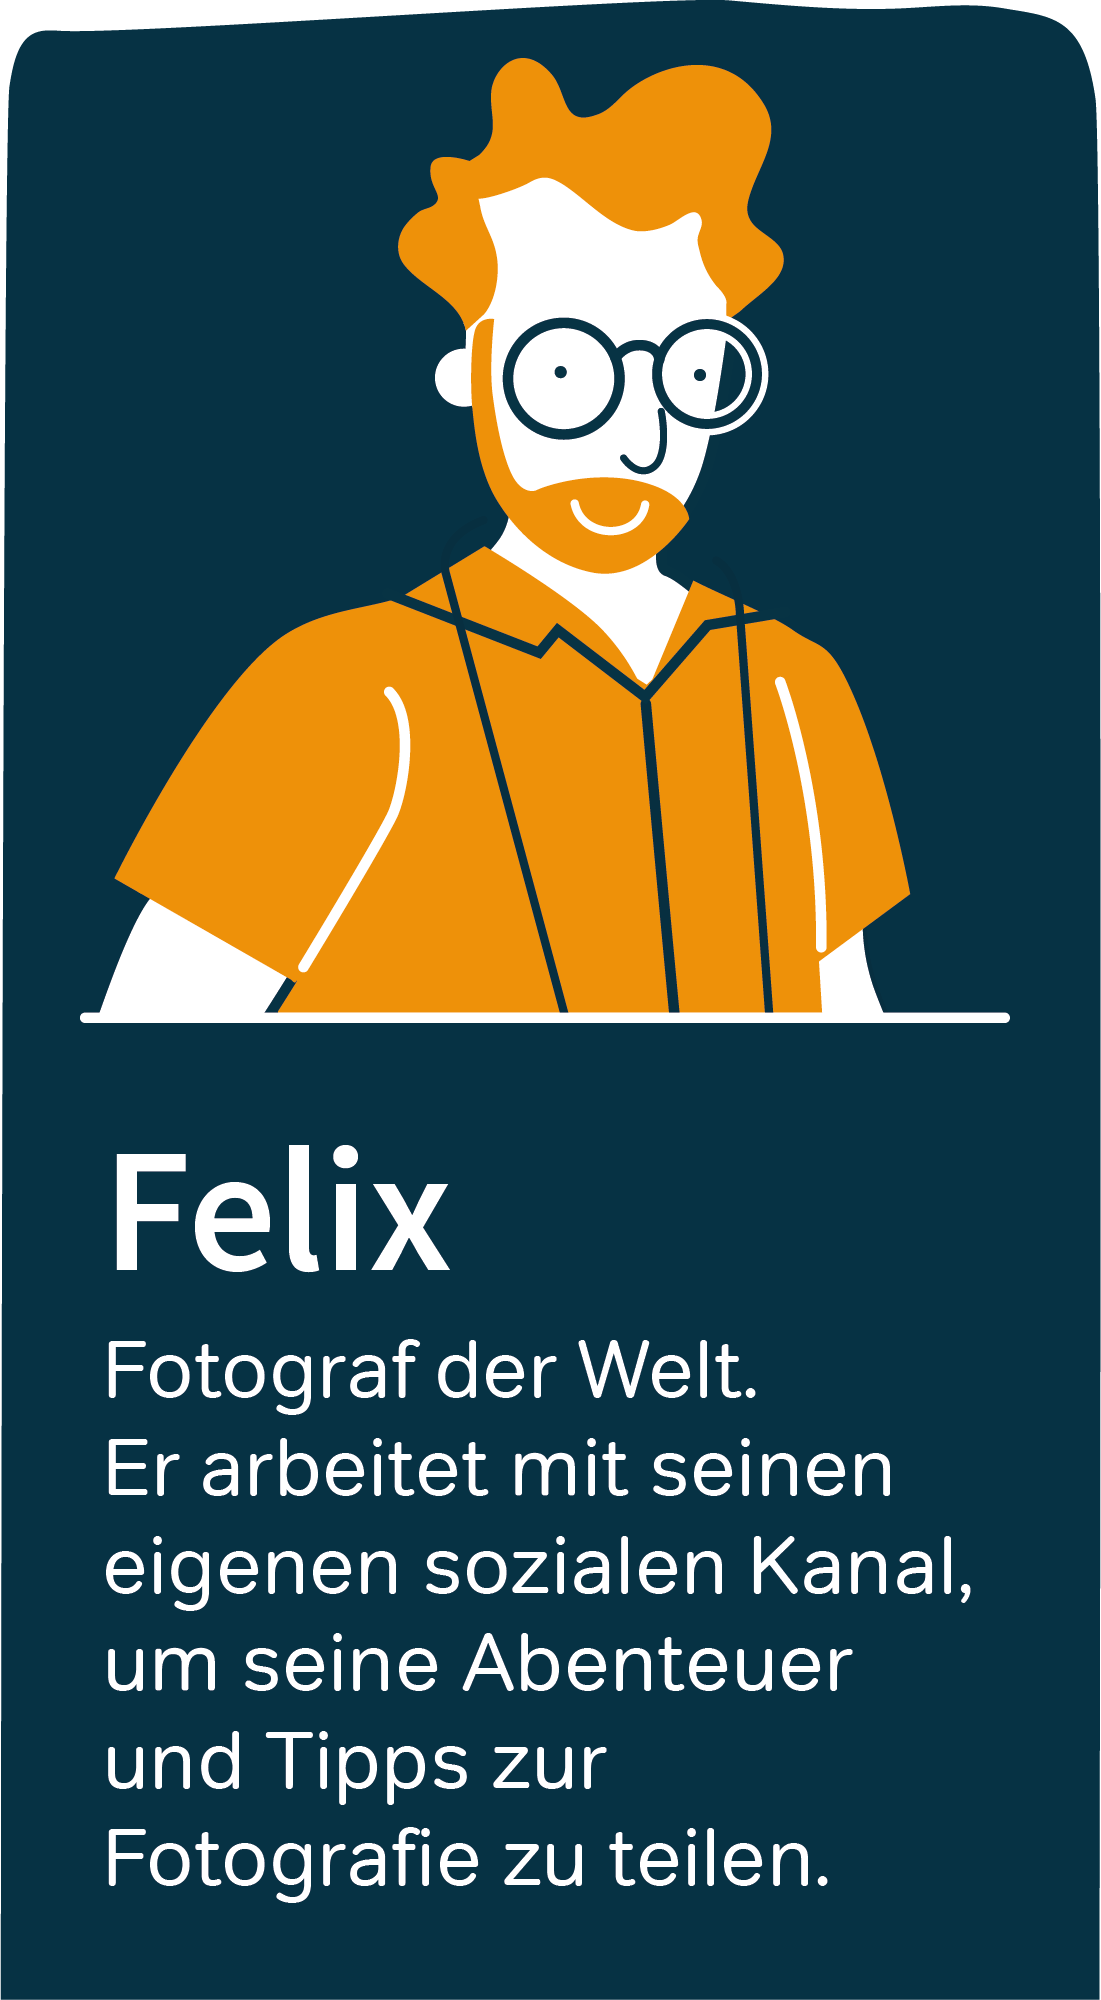 Equipe characters Felix by GPU Design